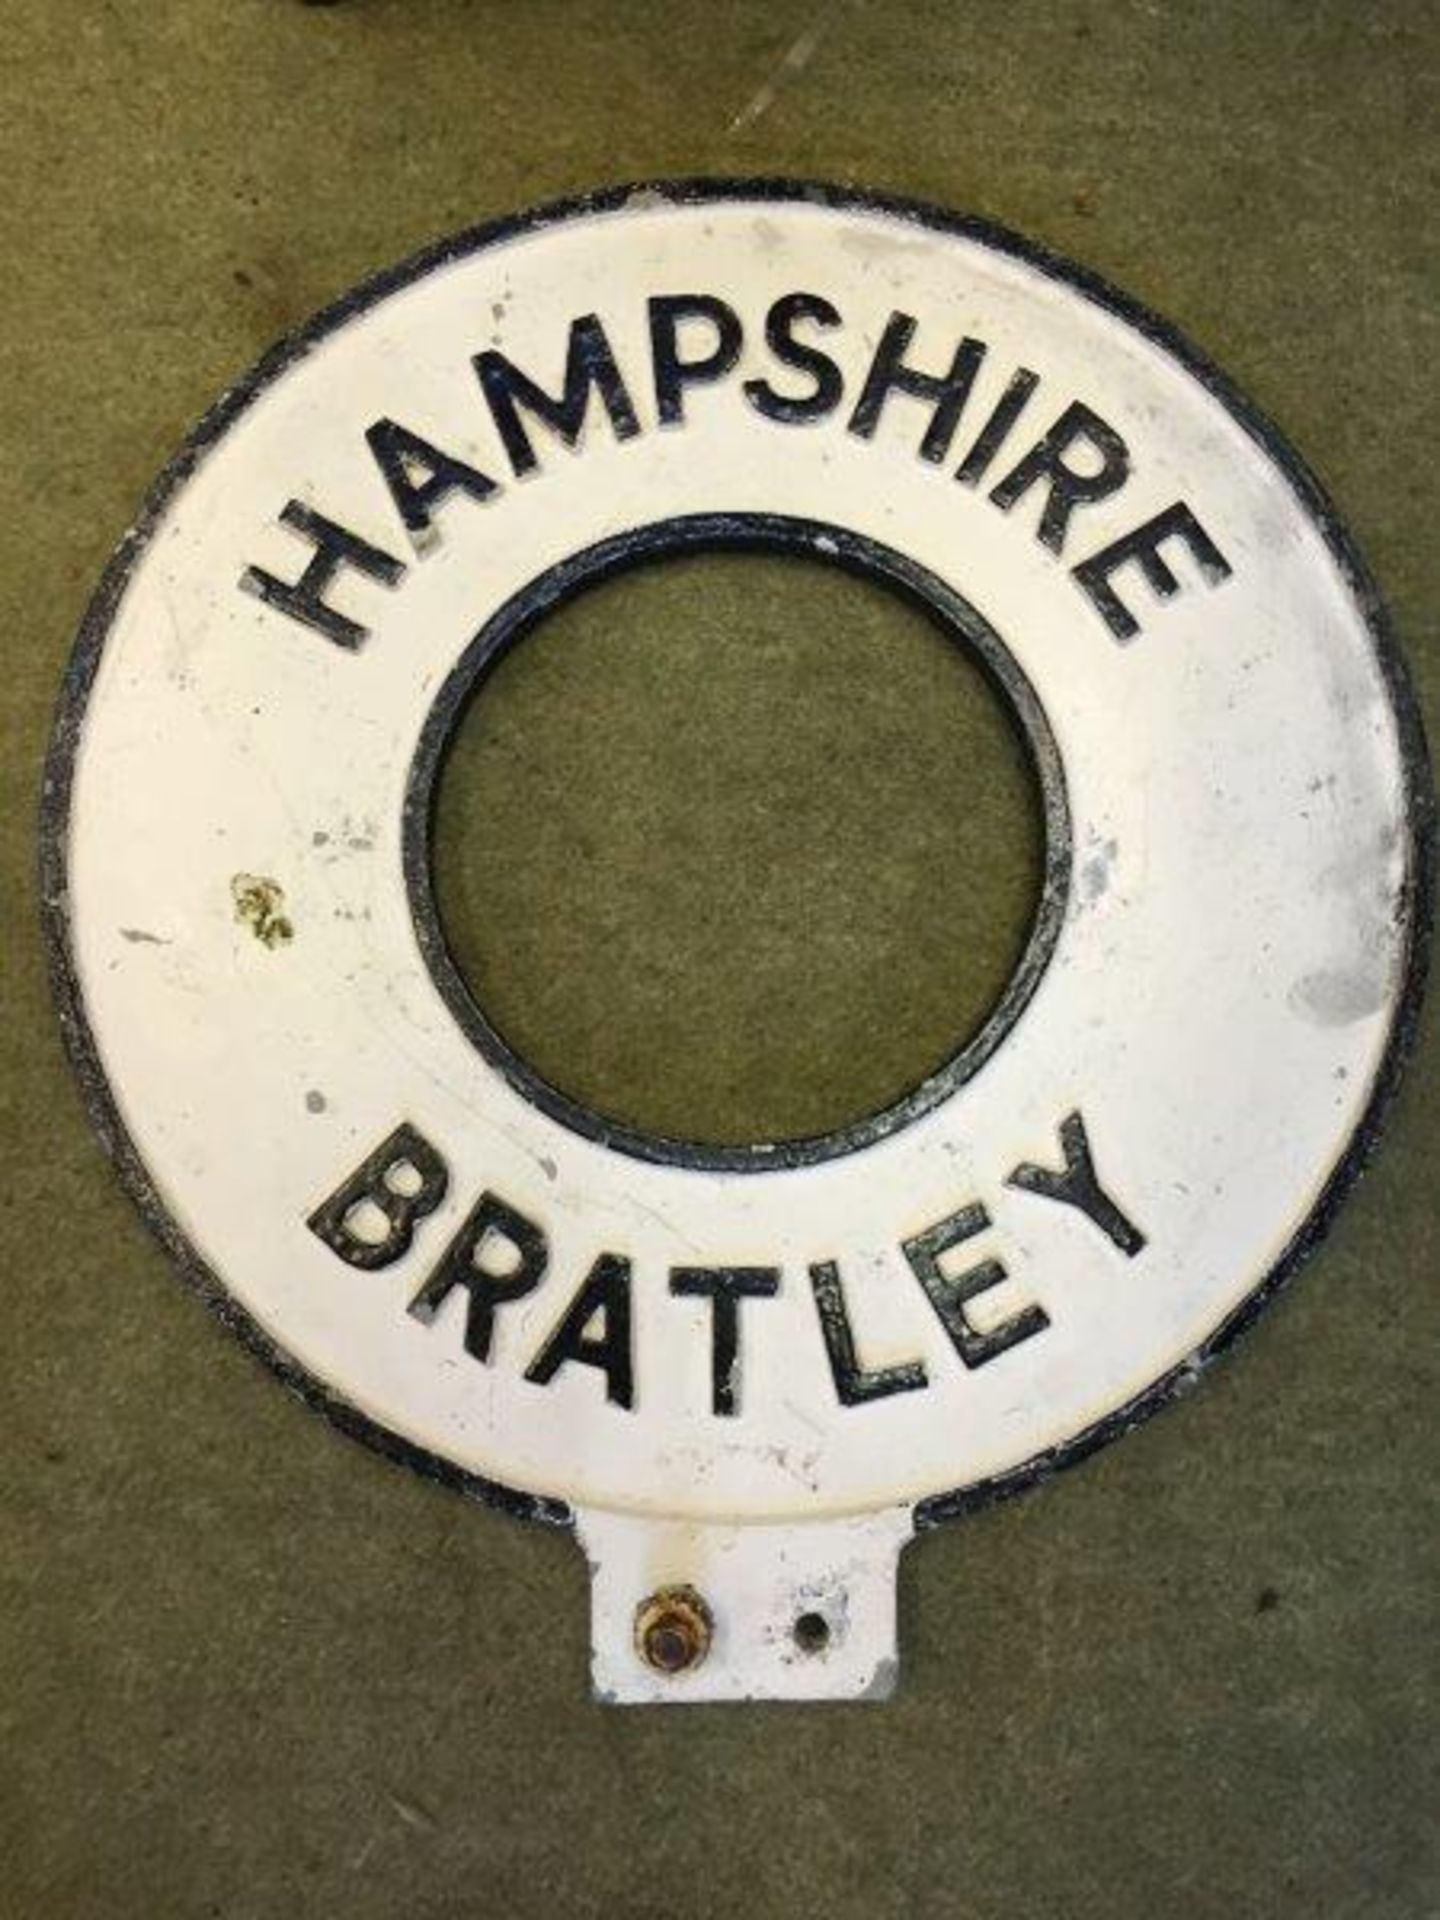 A circular cast aluminium village green sign for Bratley of Hampshire, 15" diameter. - Image 2 of 2